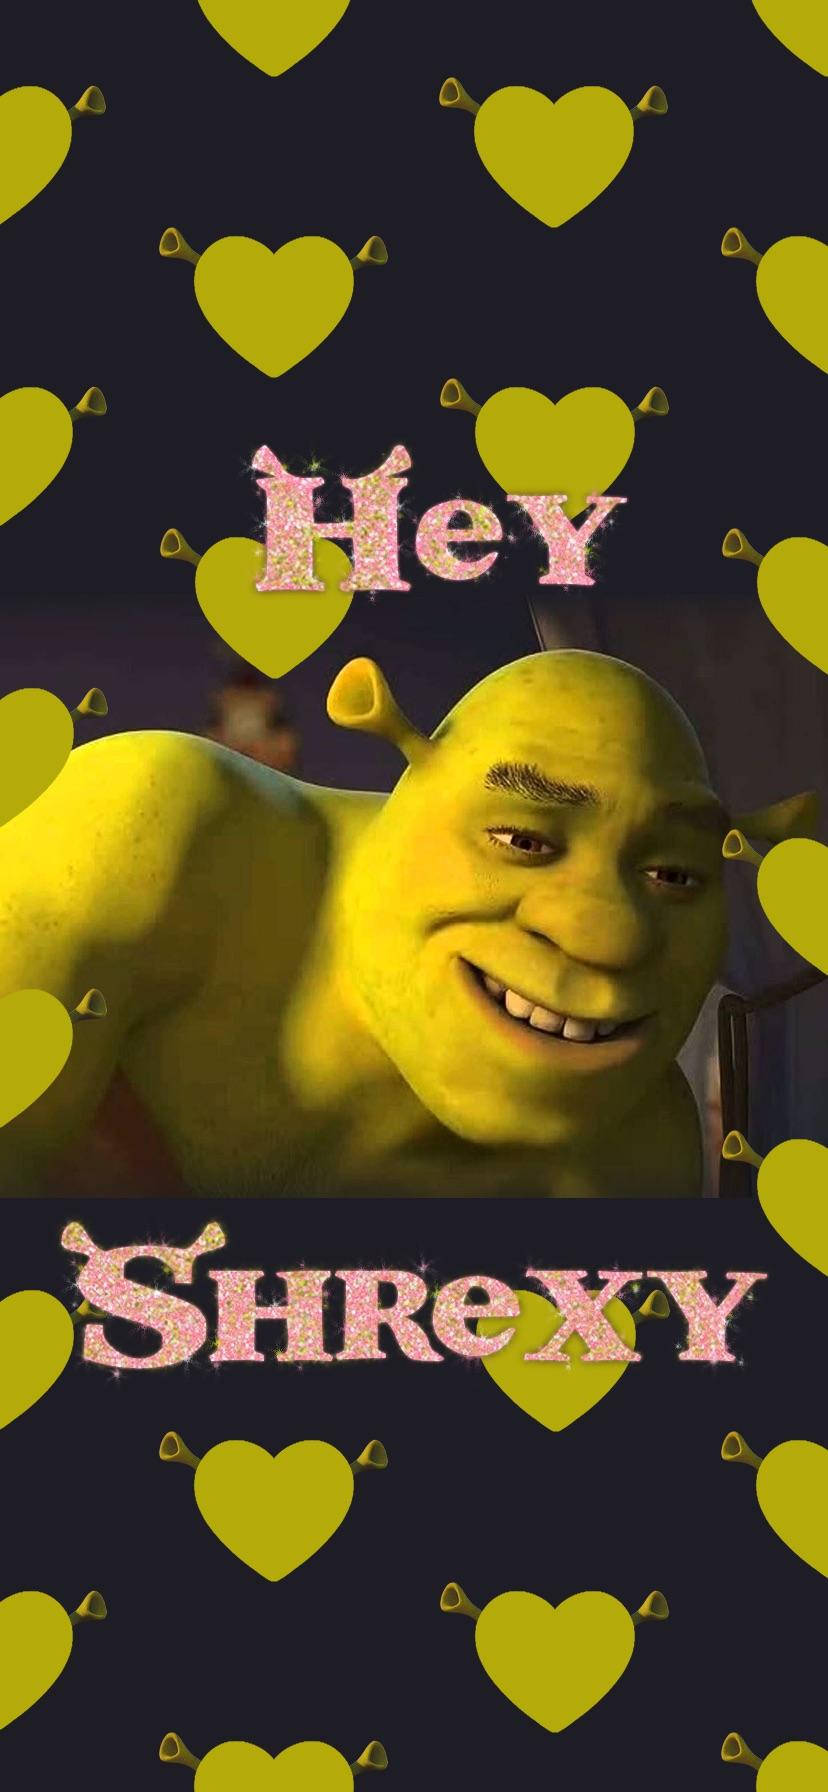 Shrek 828X1792 Wallpaper and Background Image